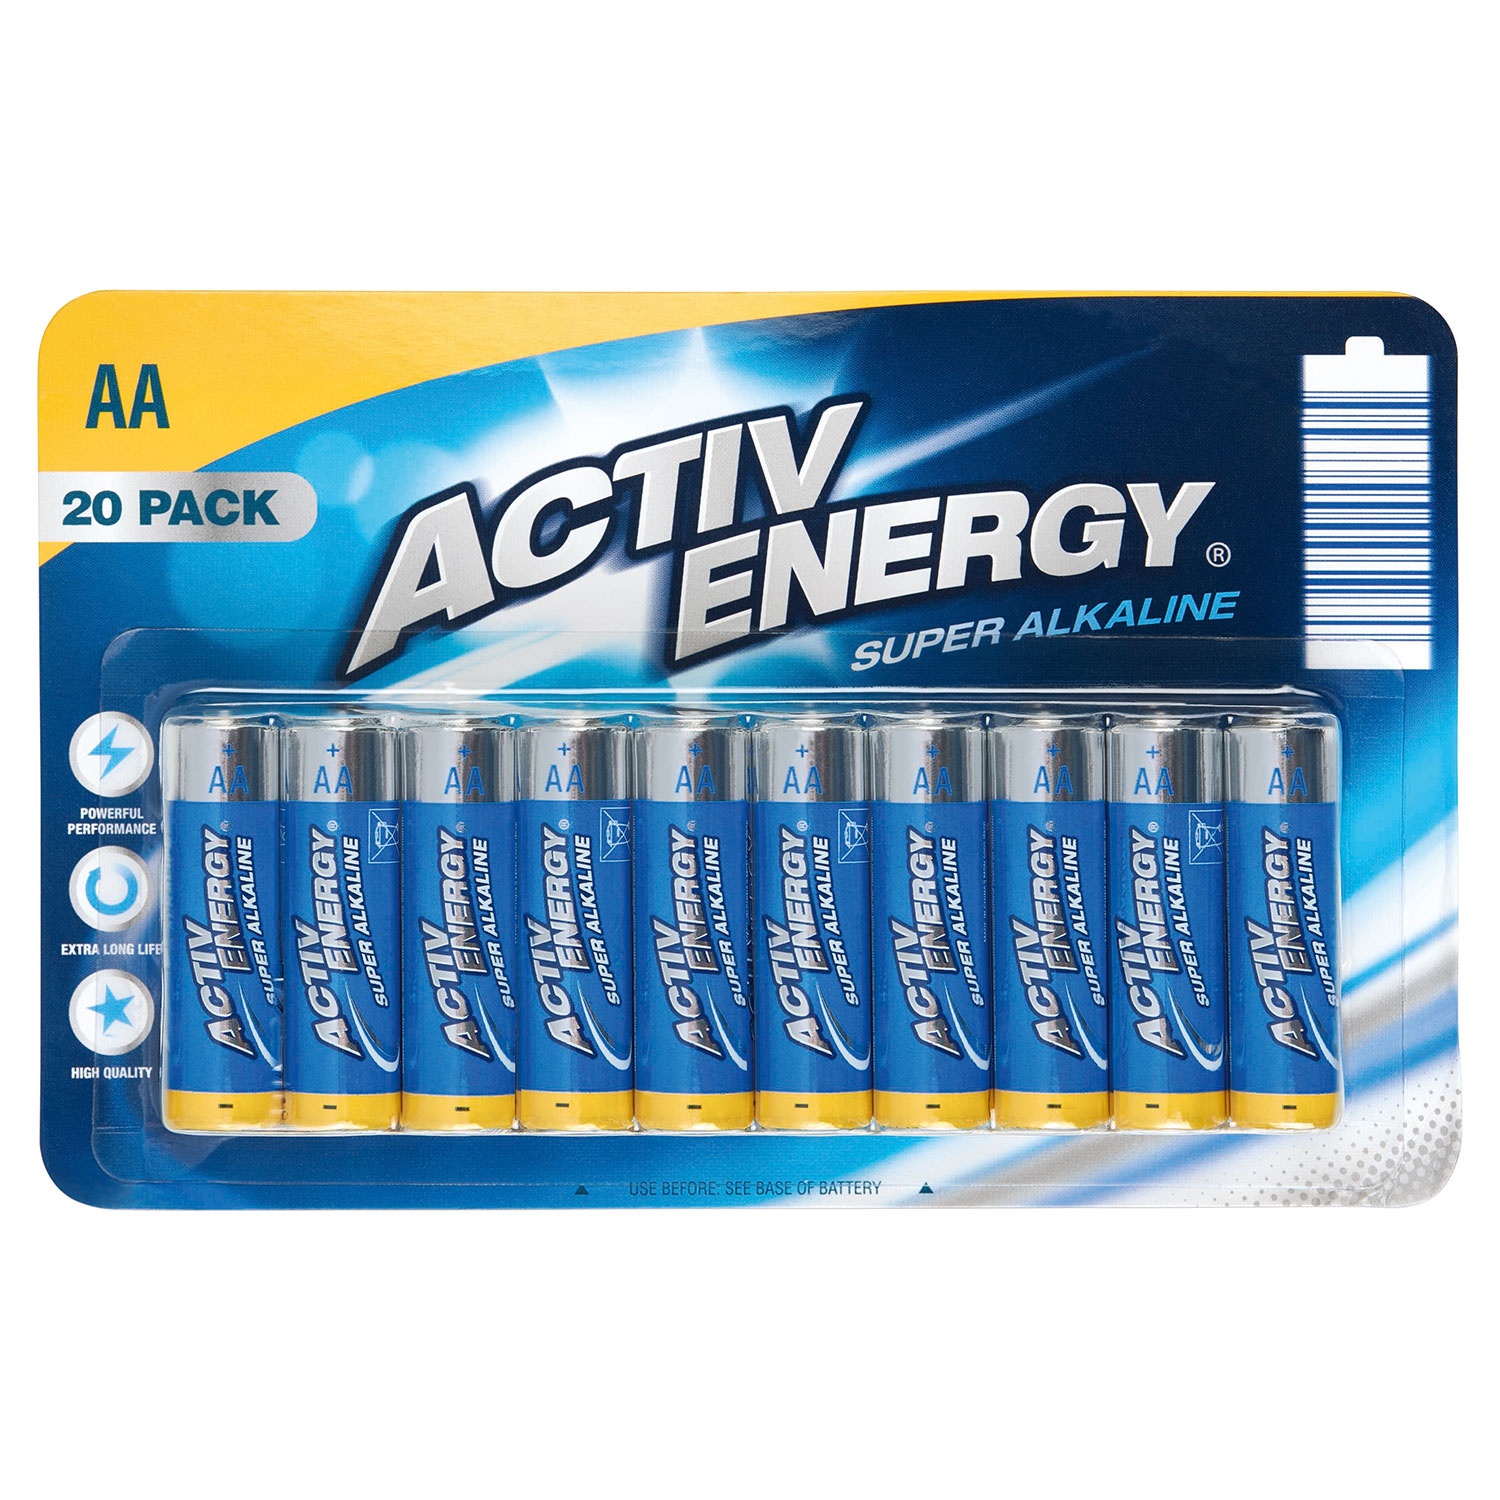 ACTIV ENERGY® Batterien, 20er-Packung